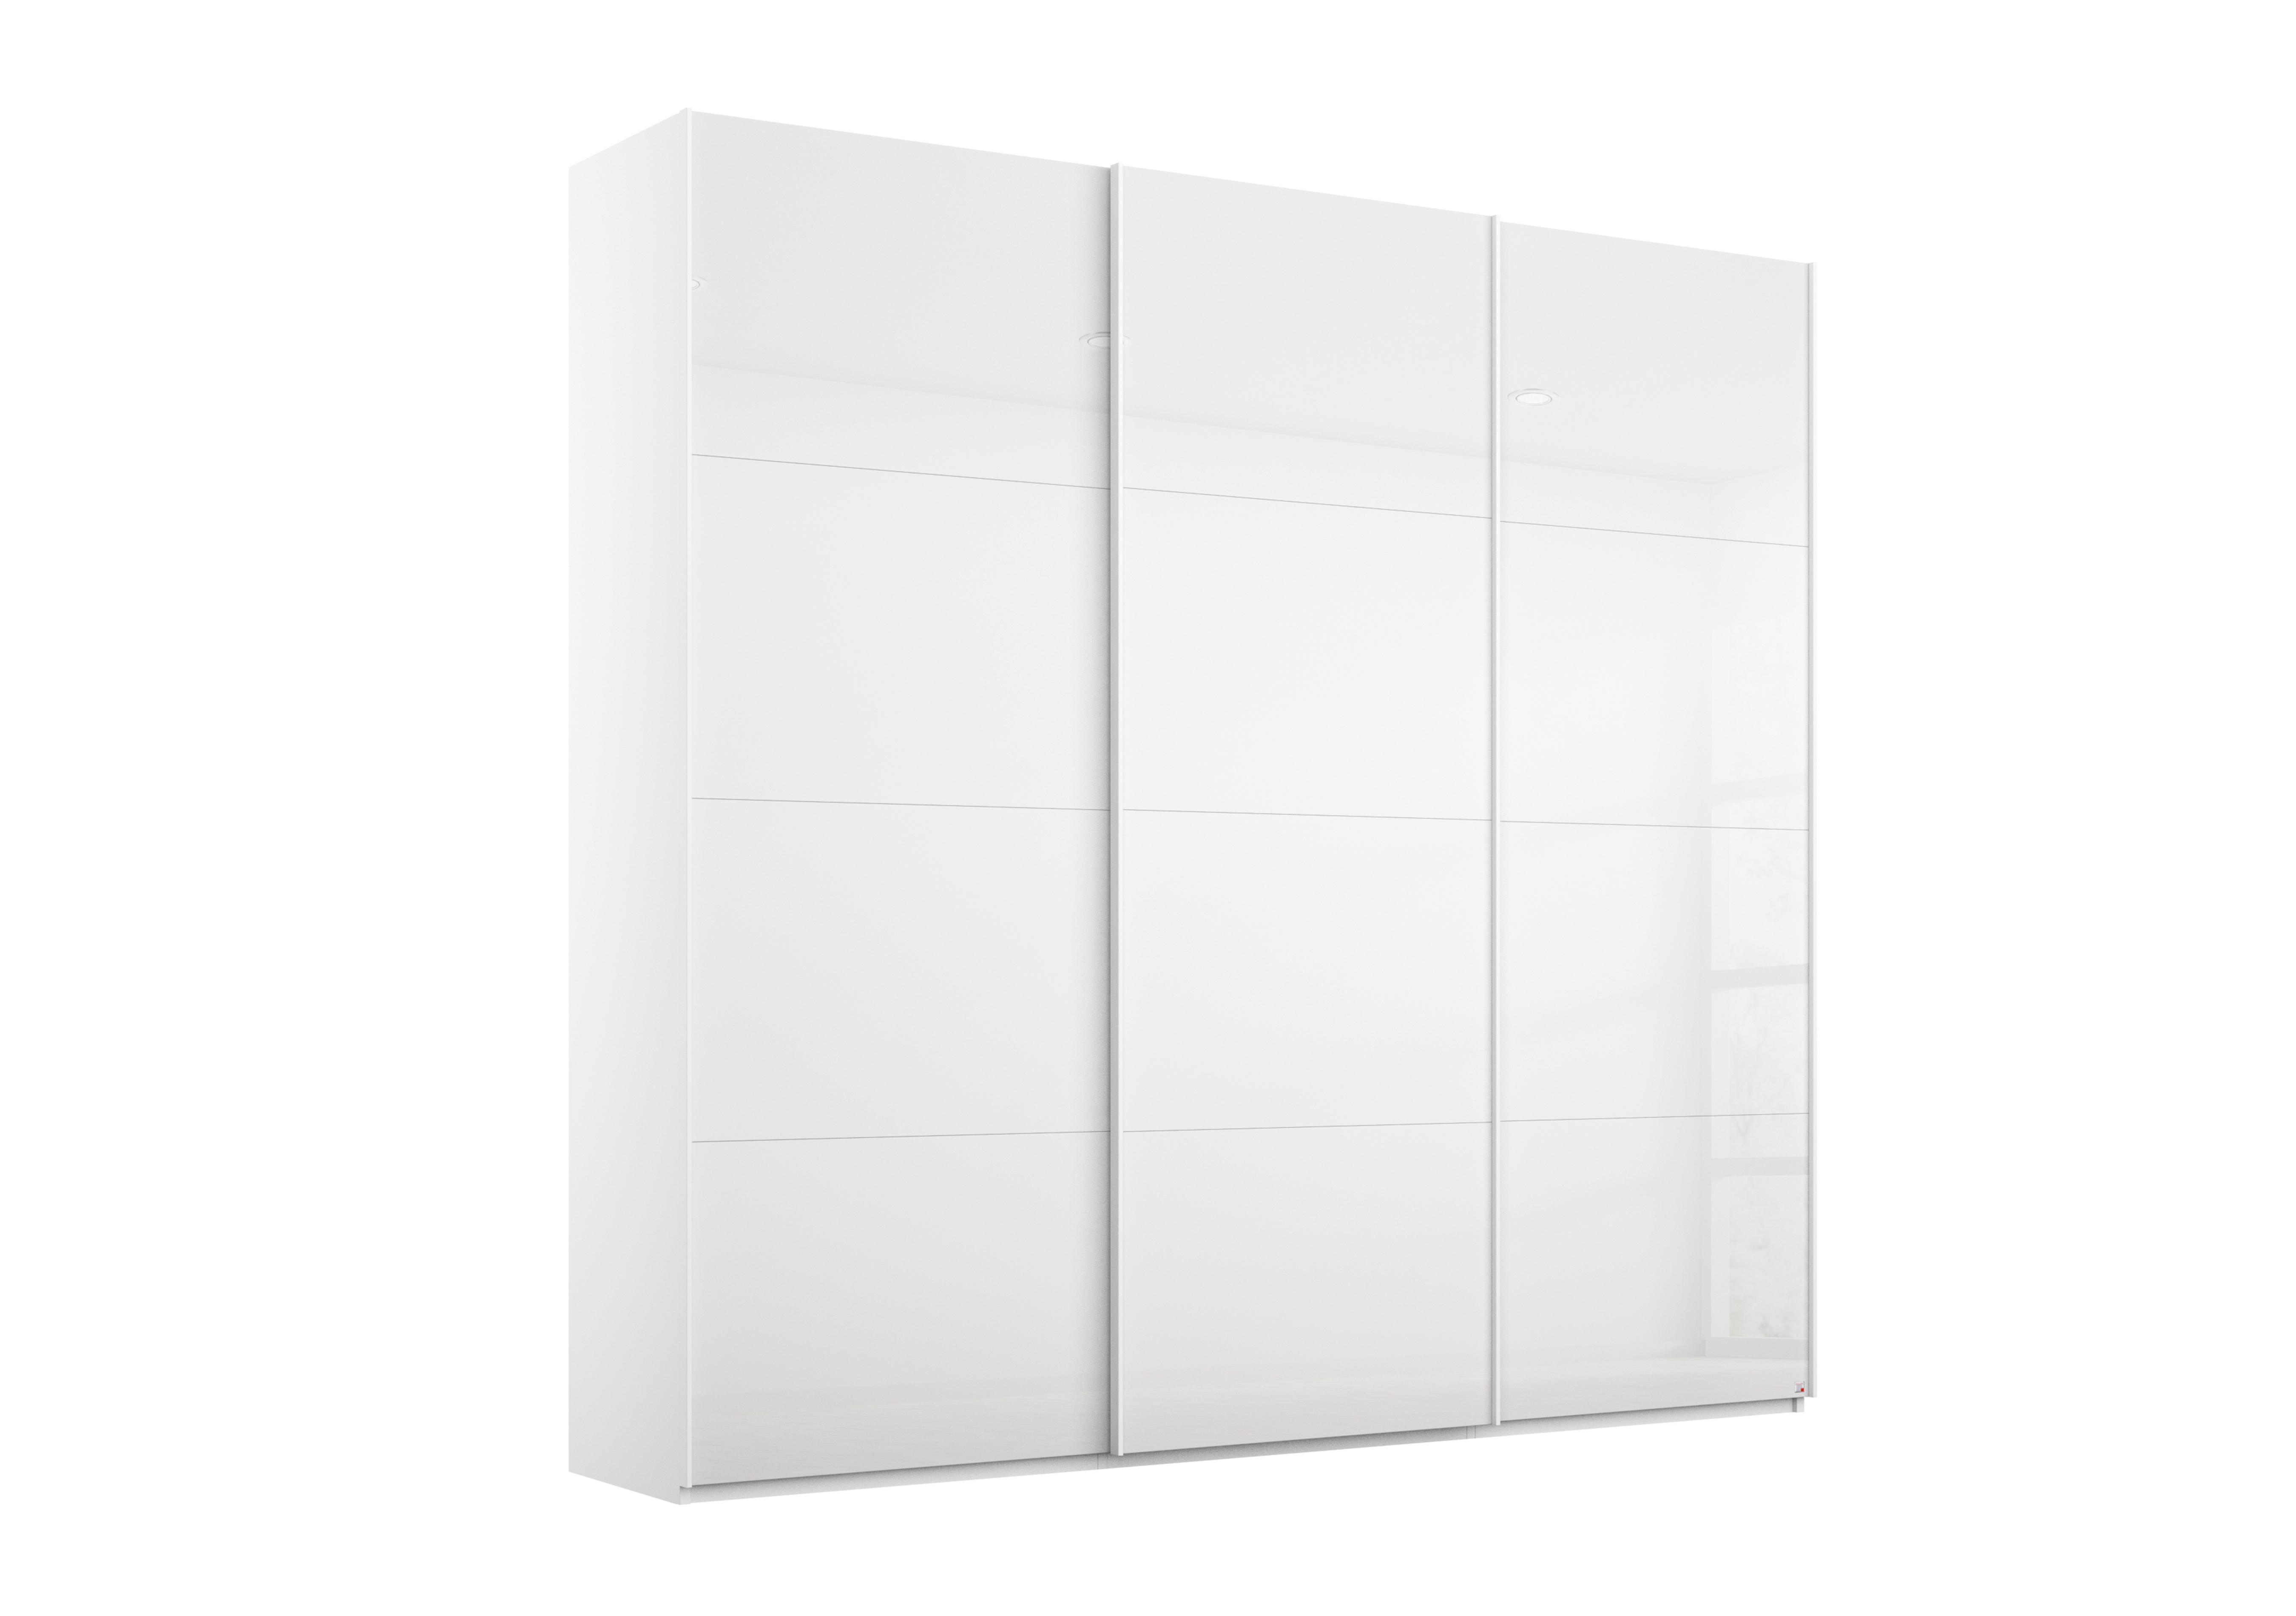 Formes Glass 3 Door Sliding Wardrobe in A131b White White Front on Furniture Village